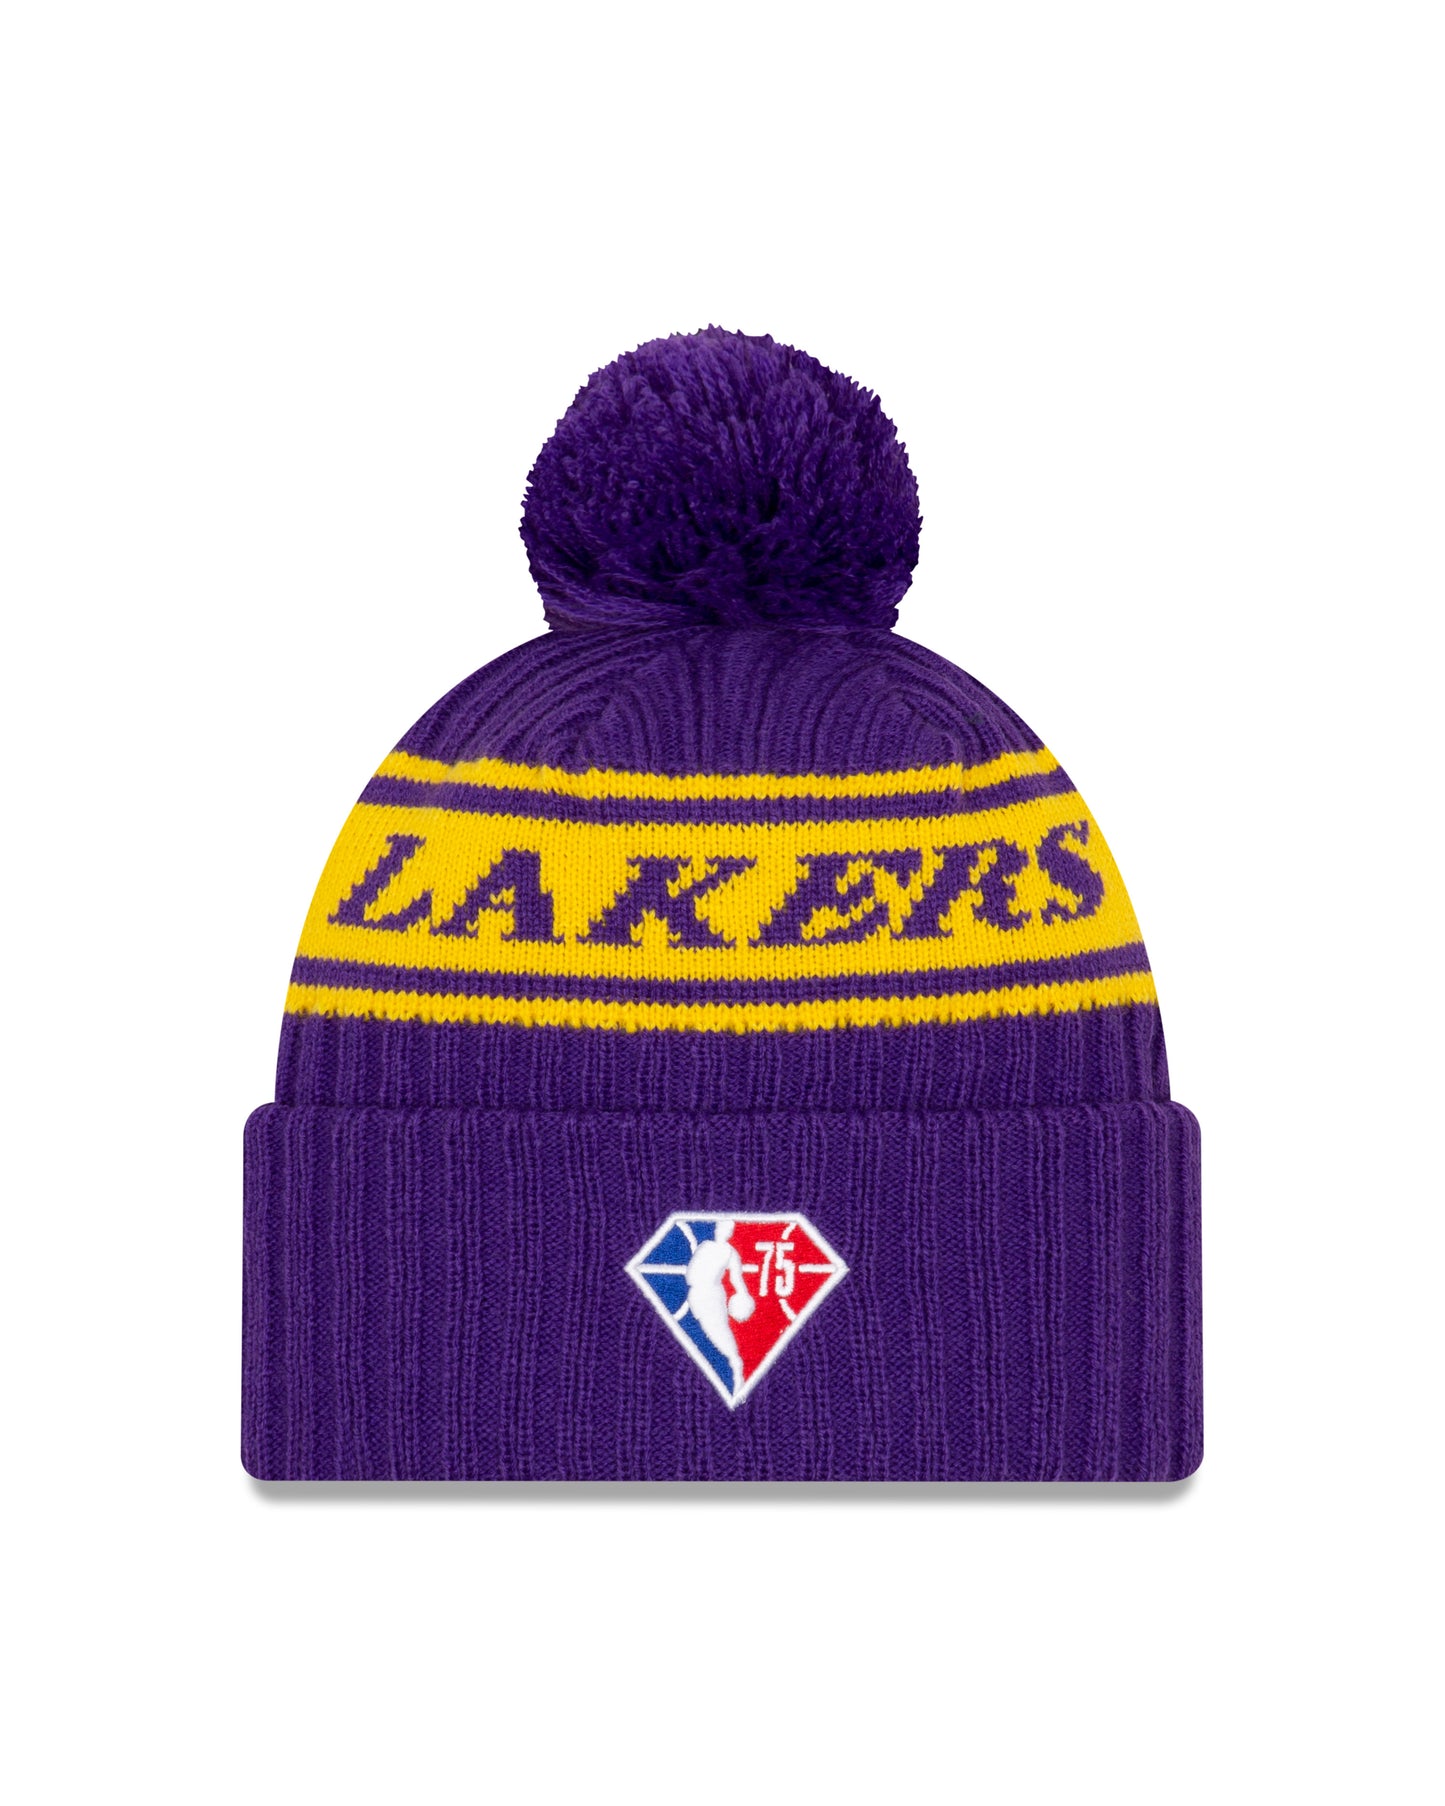 Los Angeles Lakers New Era Draft Knit Hat